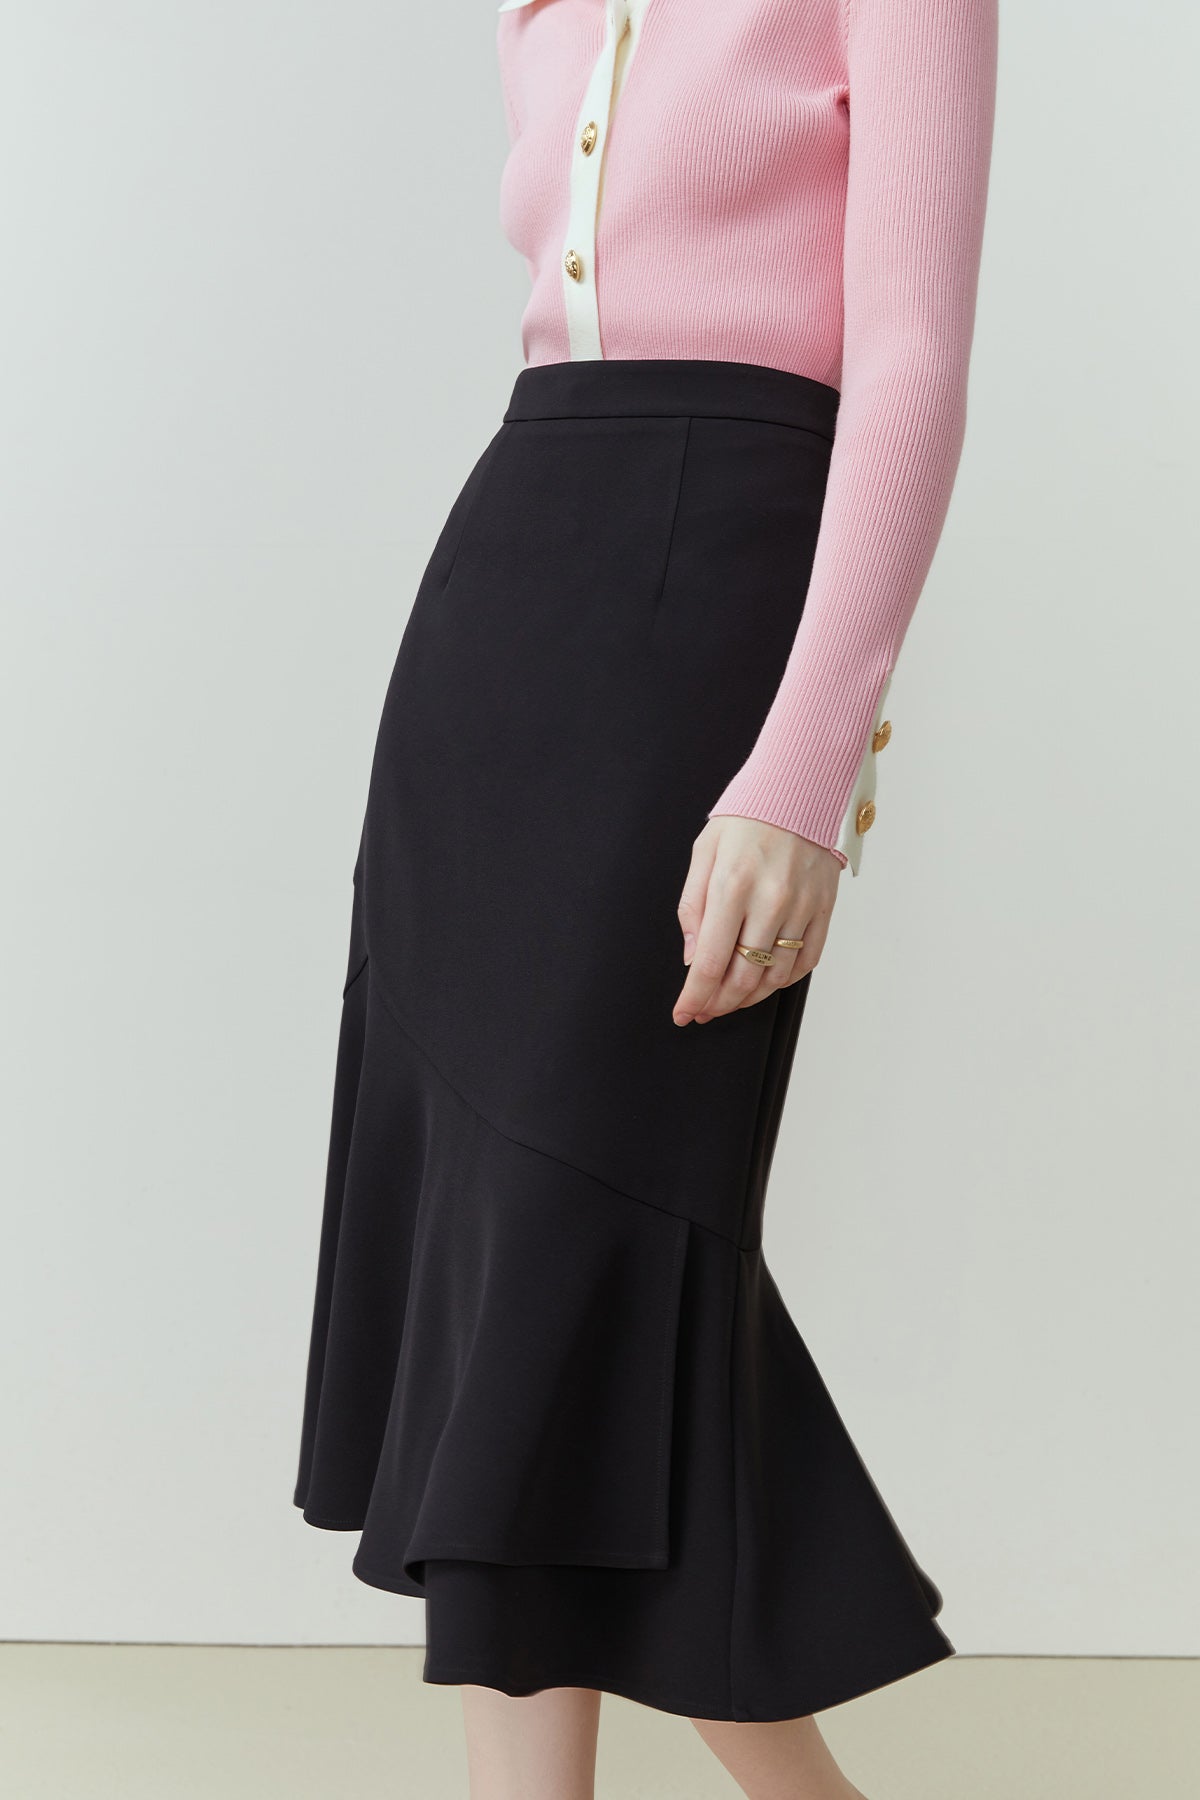 Fansilanen | Aeryn Black Fishtail Skirt